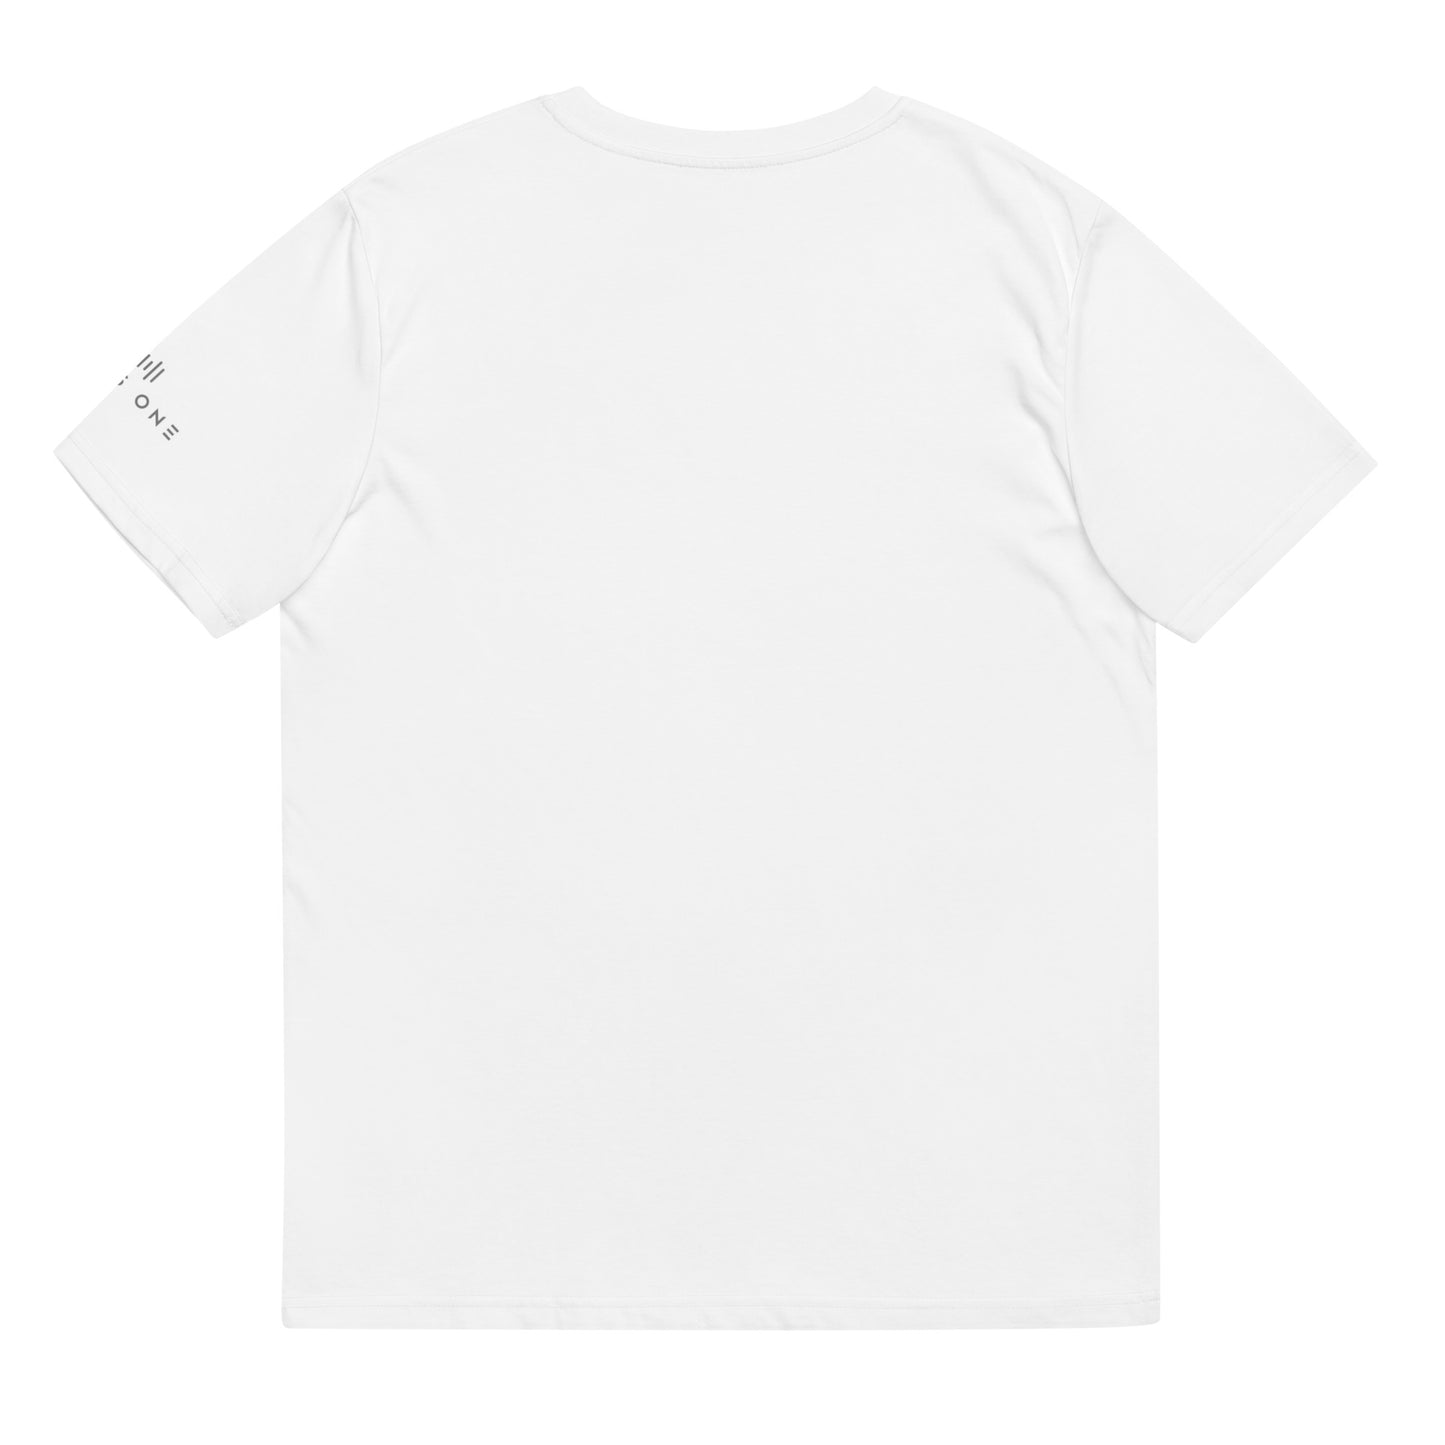 Signature Series (Nookie v3) Unisex organic cotton t-shirt MAIN FRONT PRINT